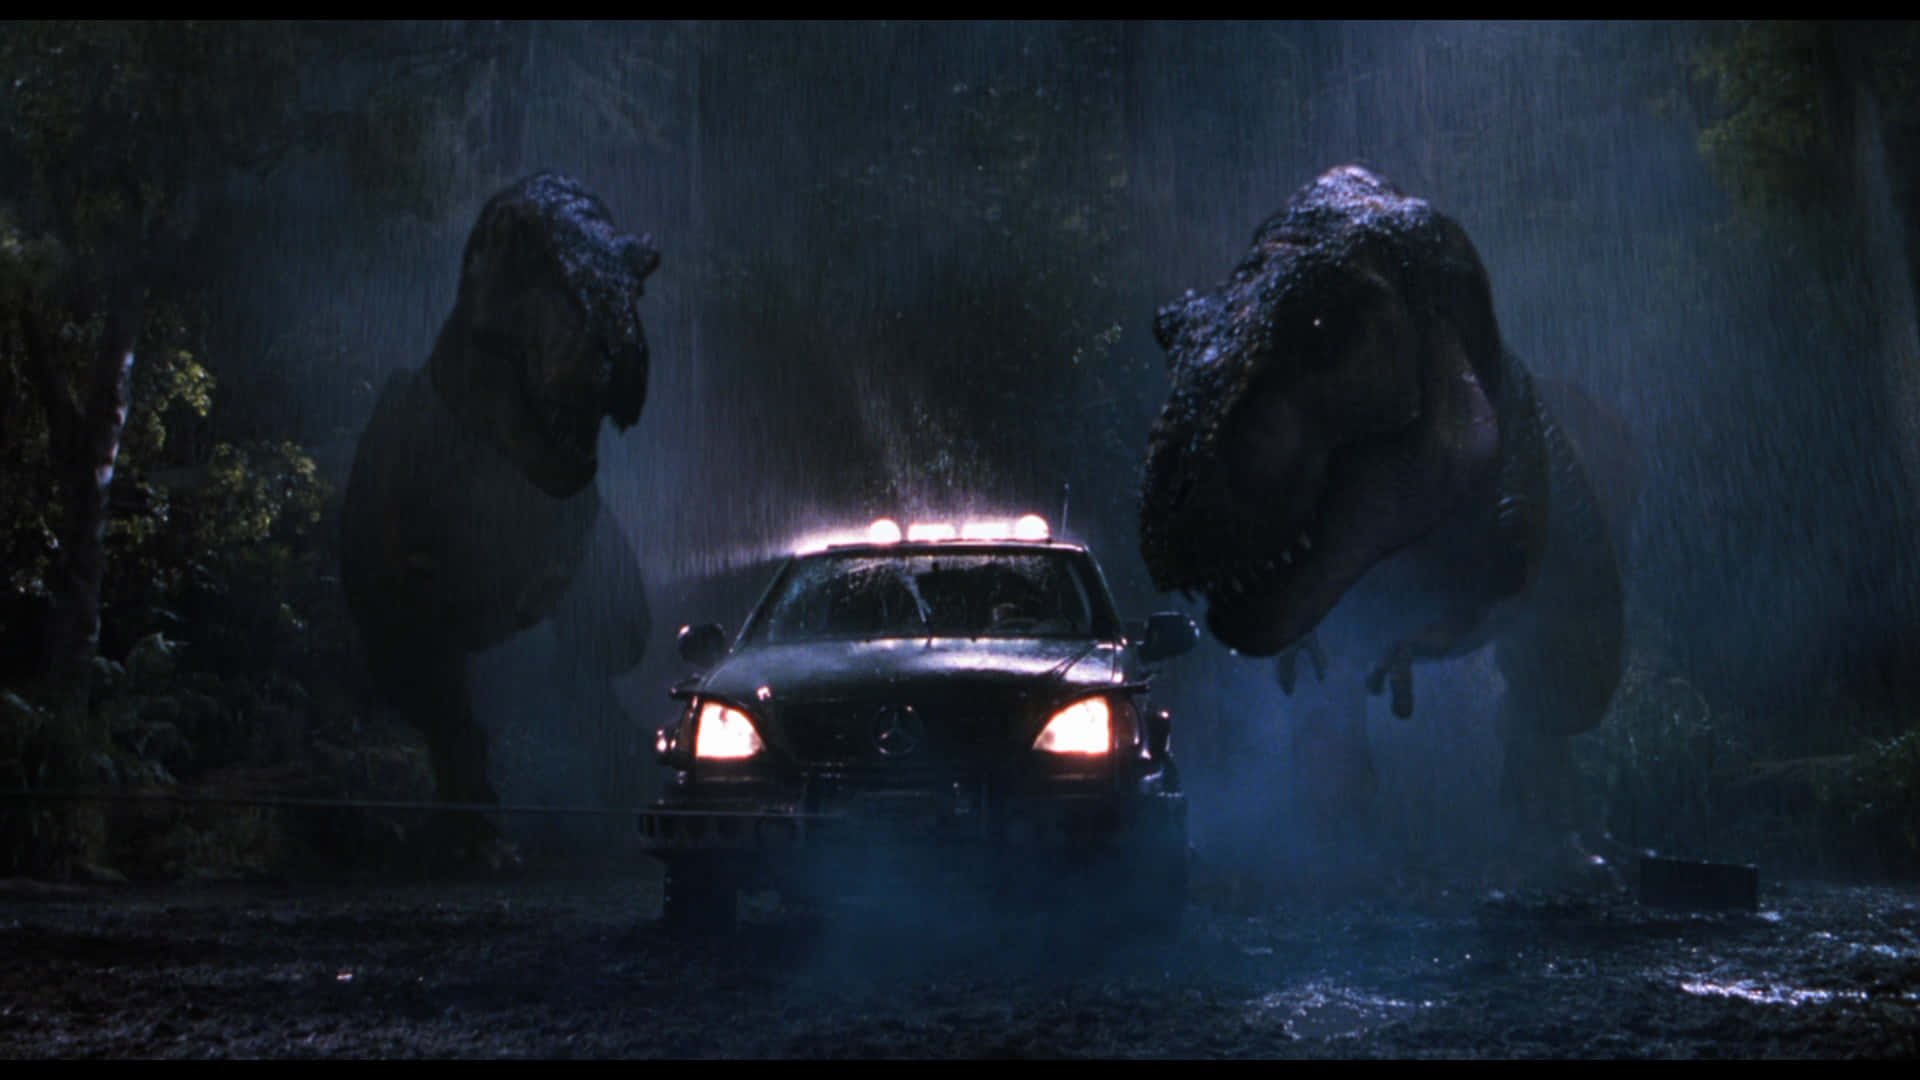 Steven Spielberg's classic film, Jurassic Park